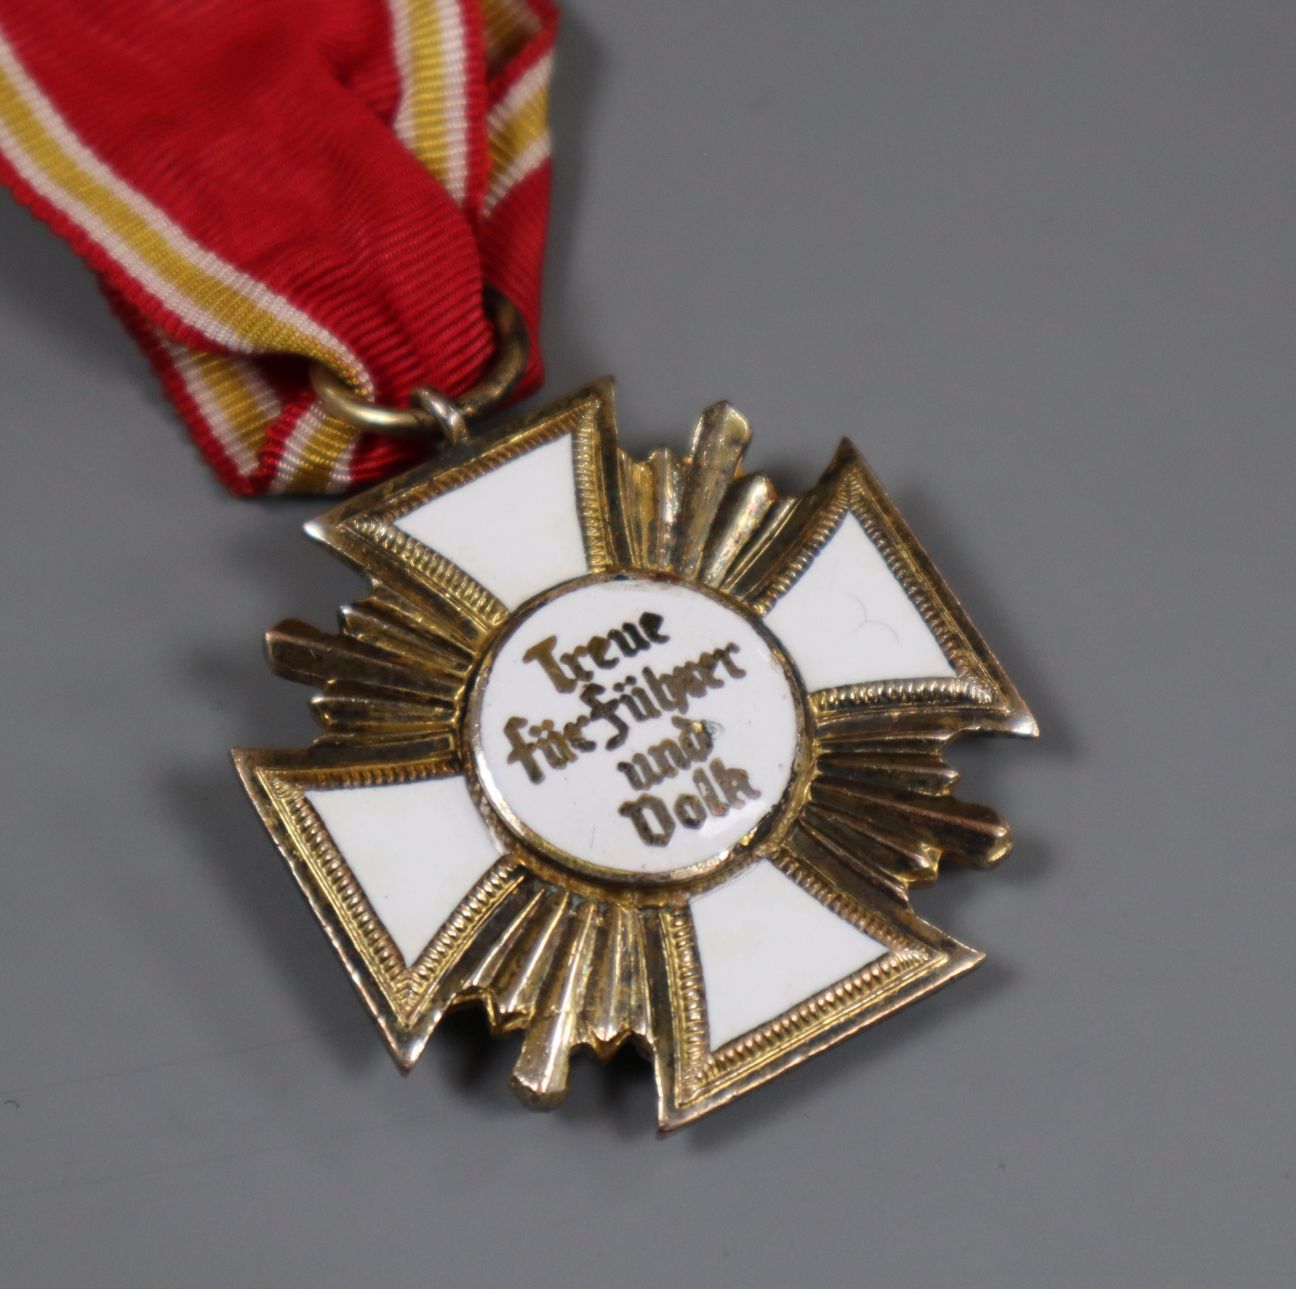 A NSDAP 25 Year Medal